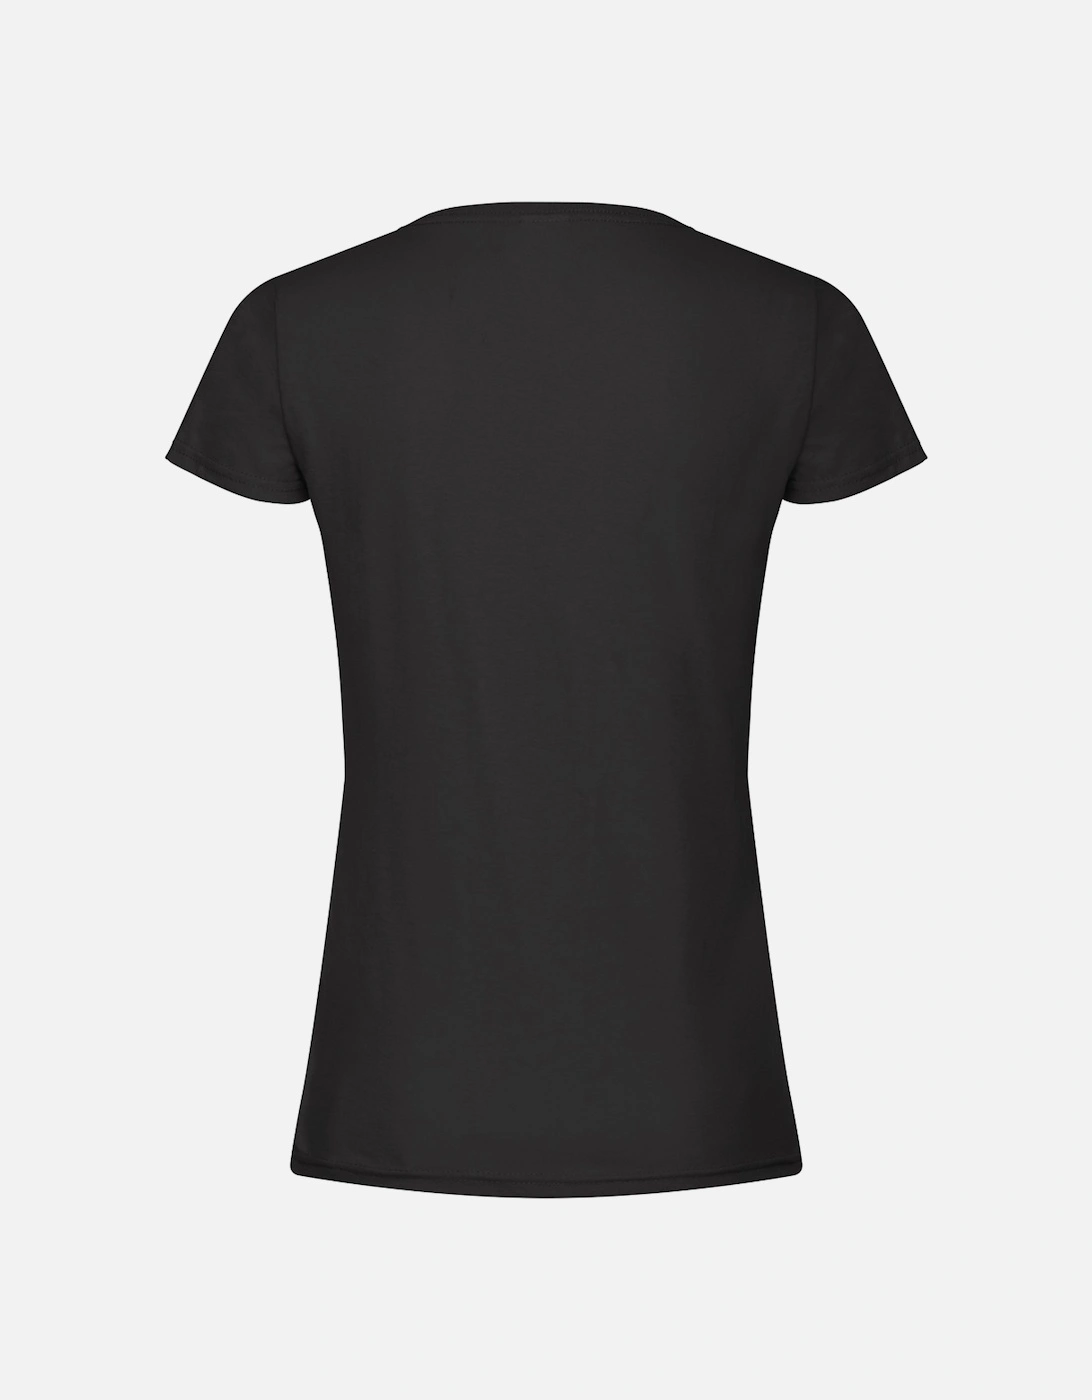 Womens/Ladies Original Lady Fit T-Shirt